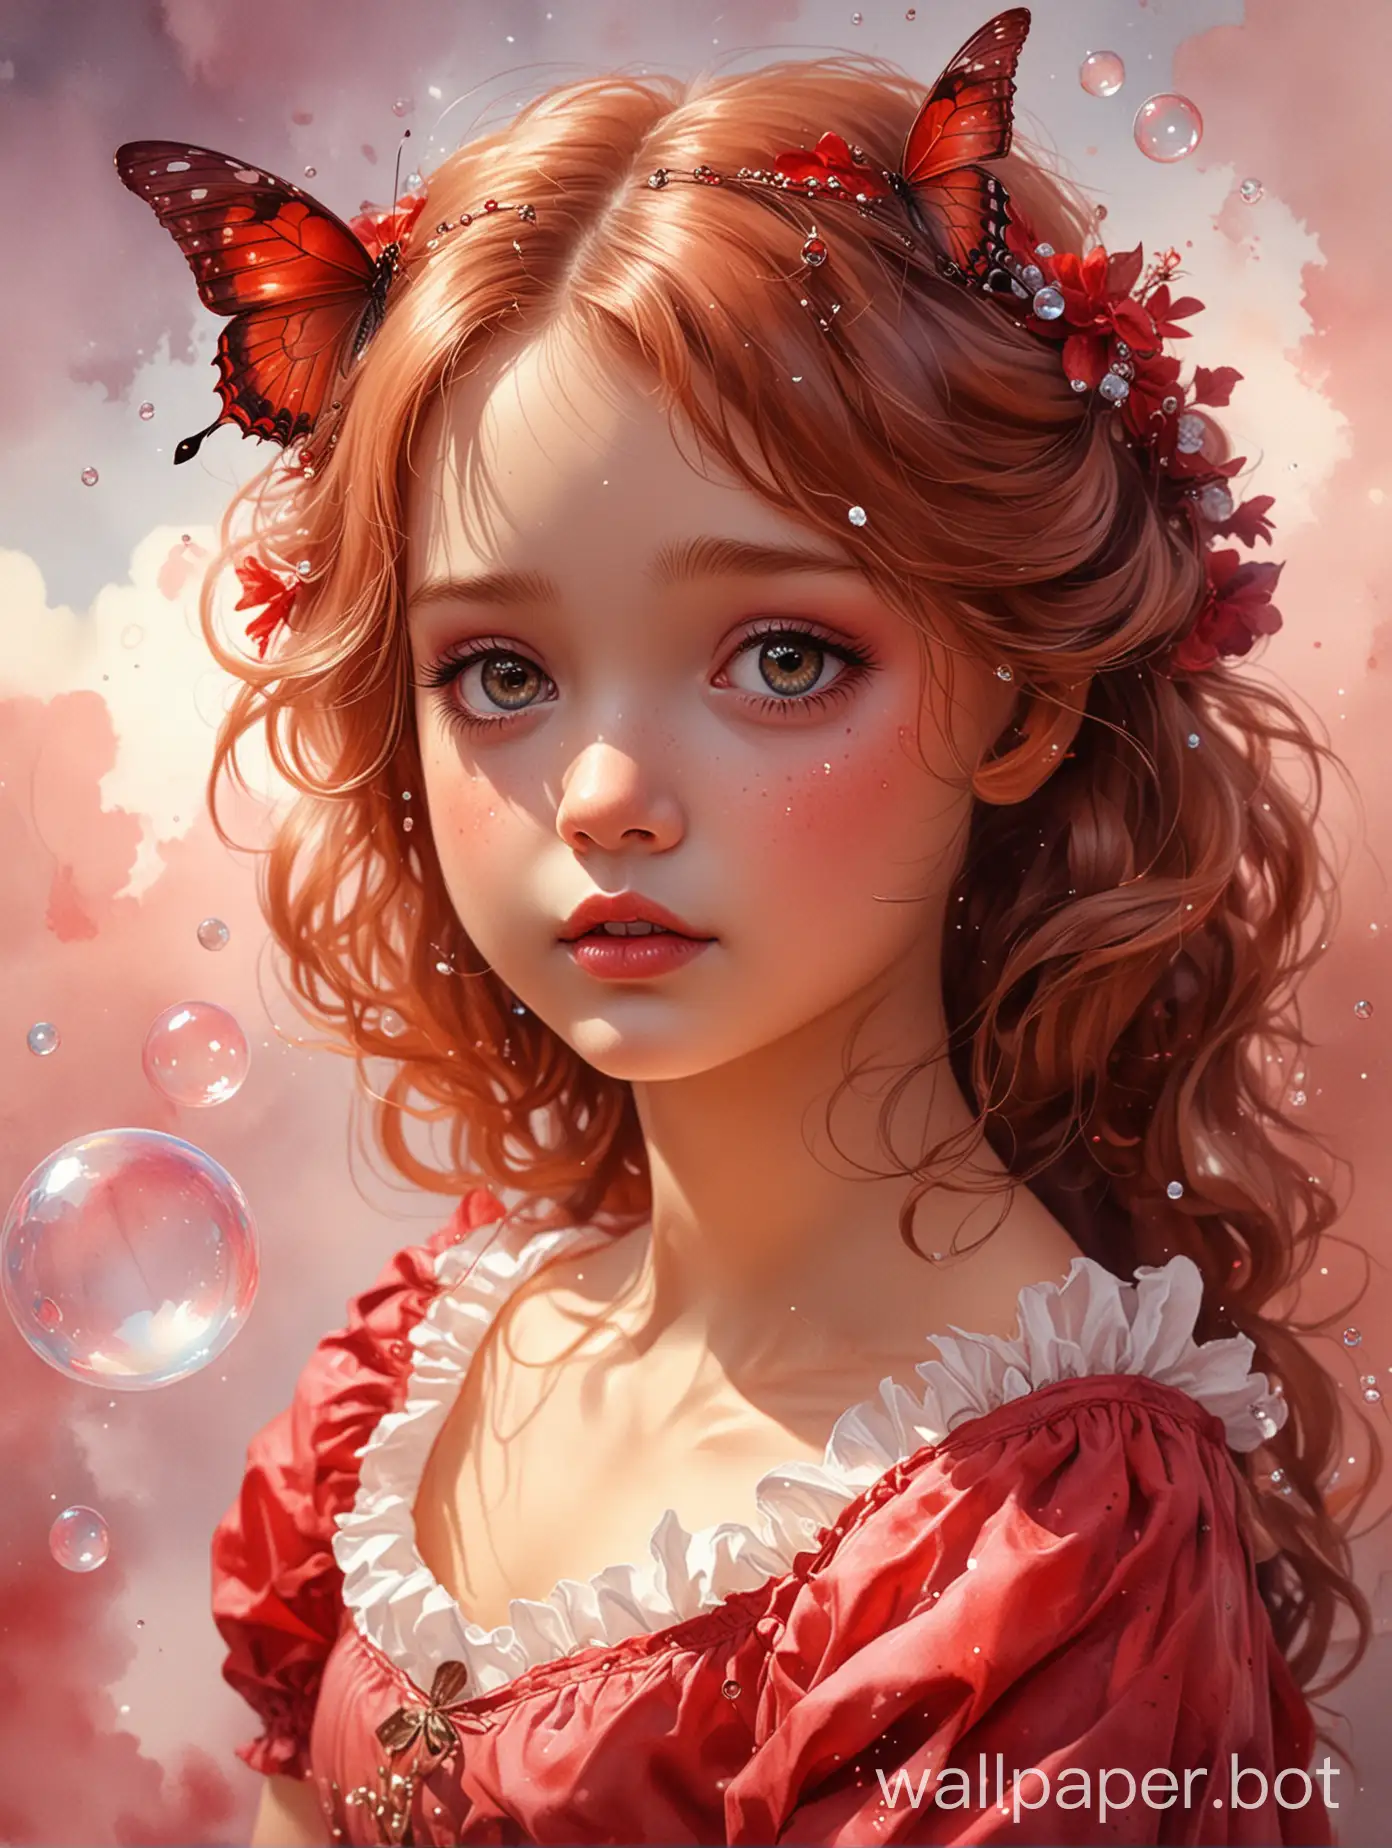 Enchanting-Butterfly-Princess-Amidst-Crimson-Watercolor-Shades